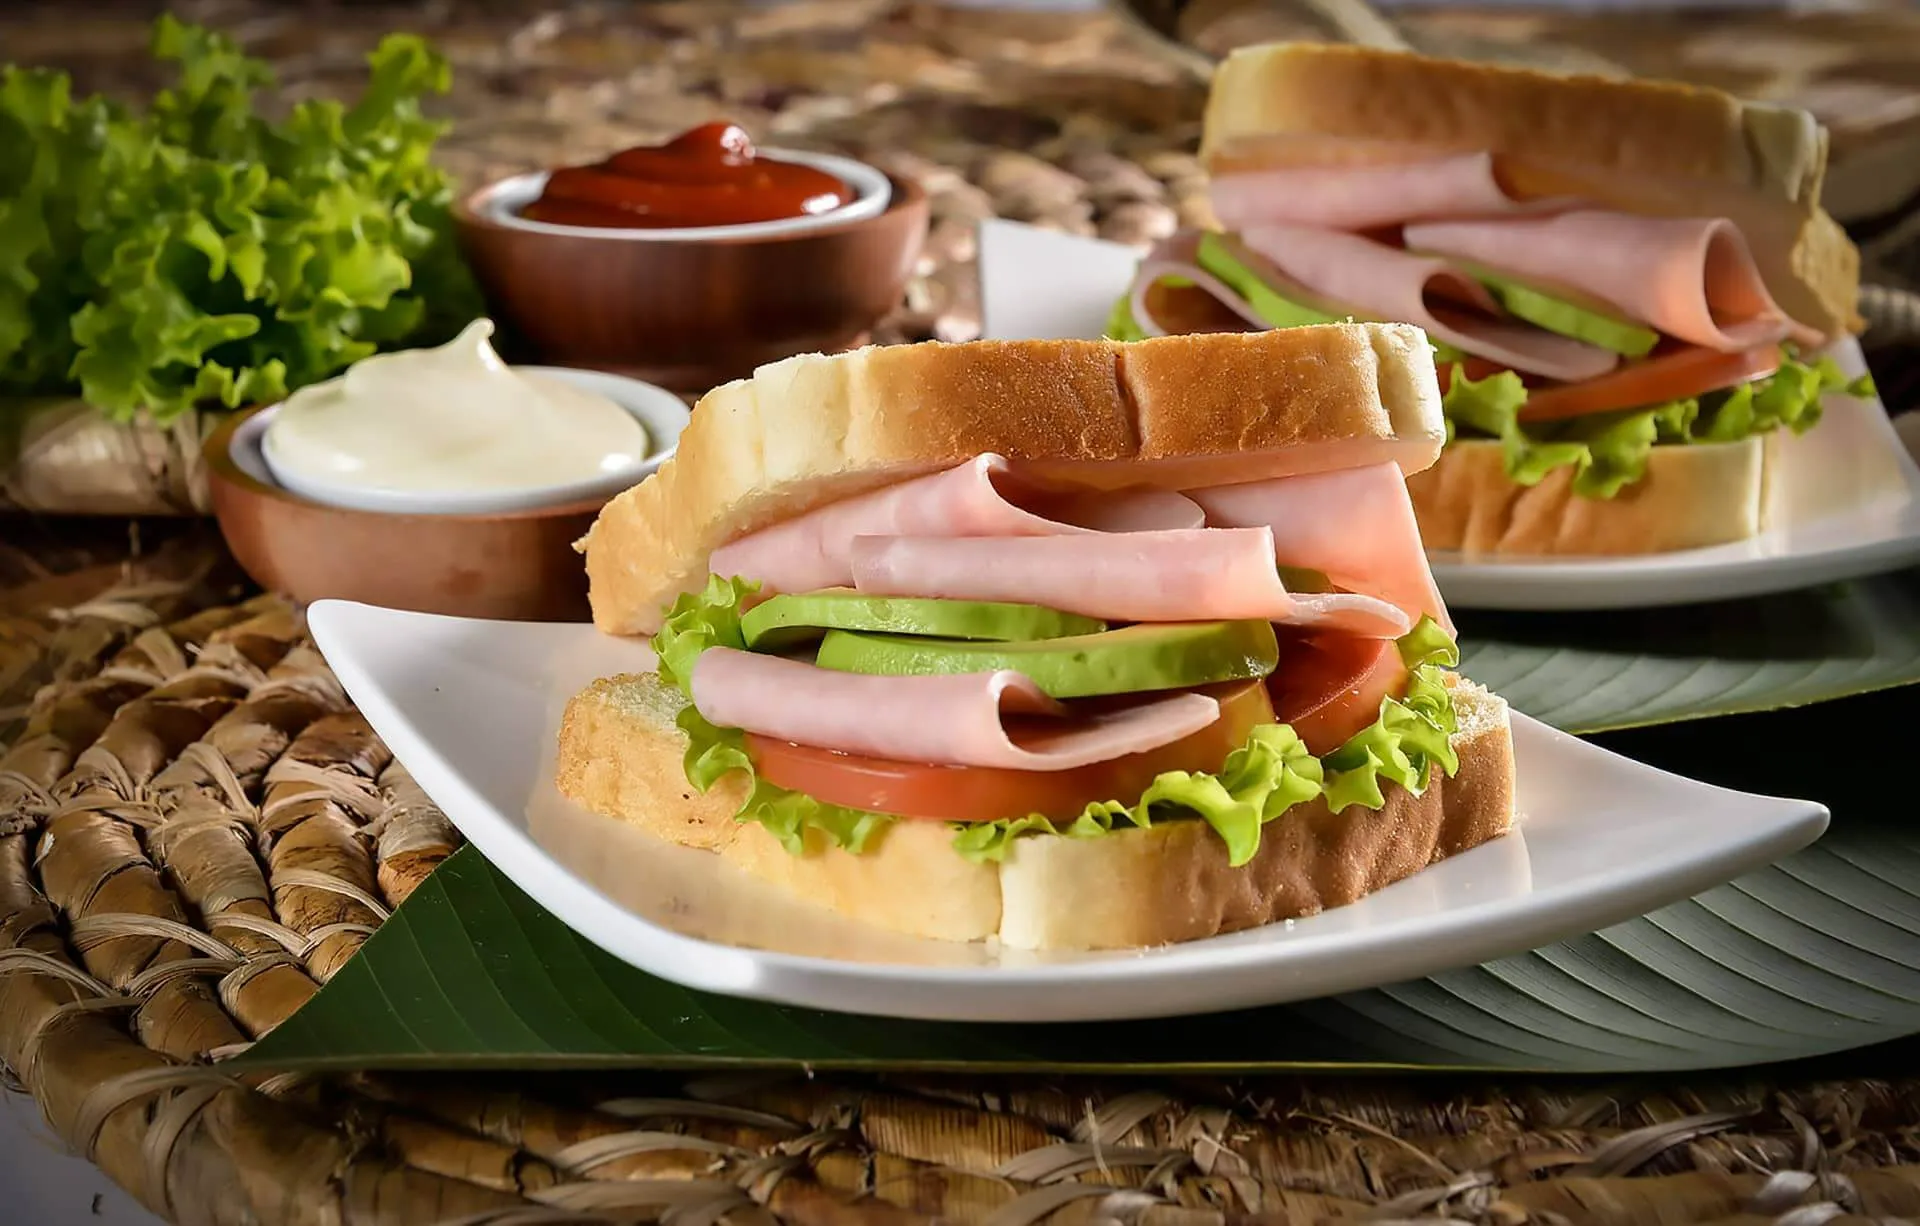 Sandwich de aguacate y jamon - Sandwich de aguacate - Receta aguacate